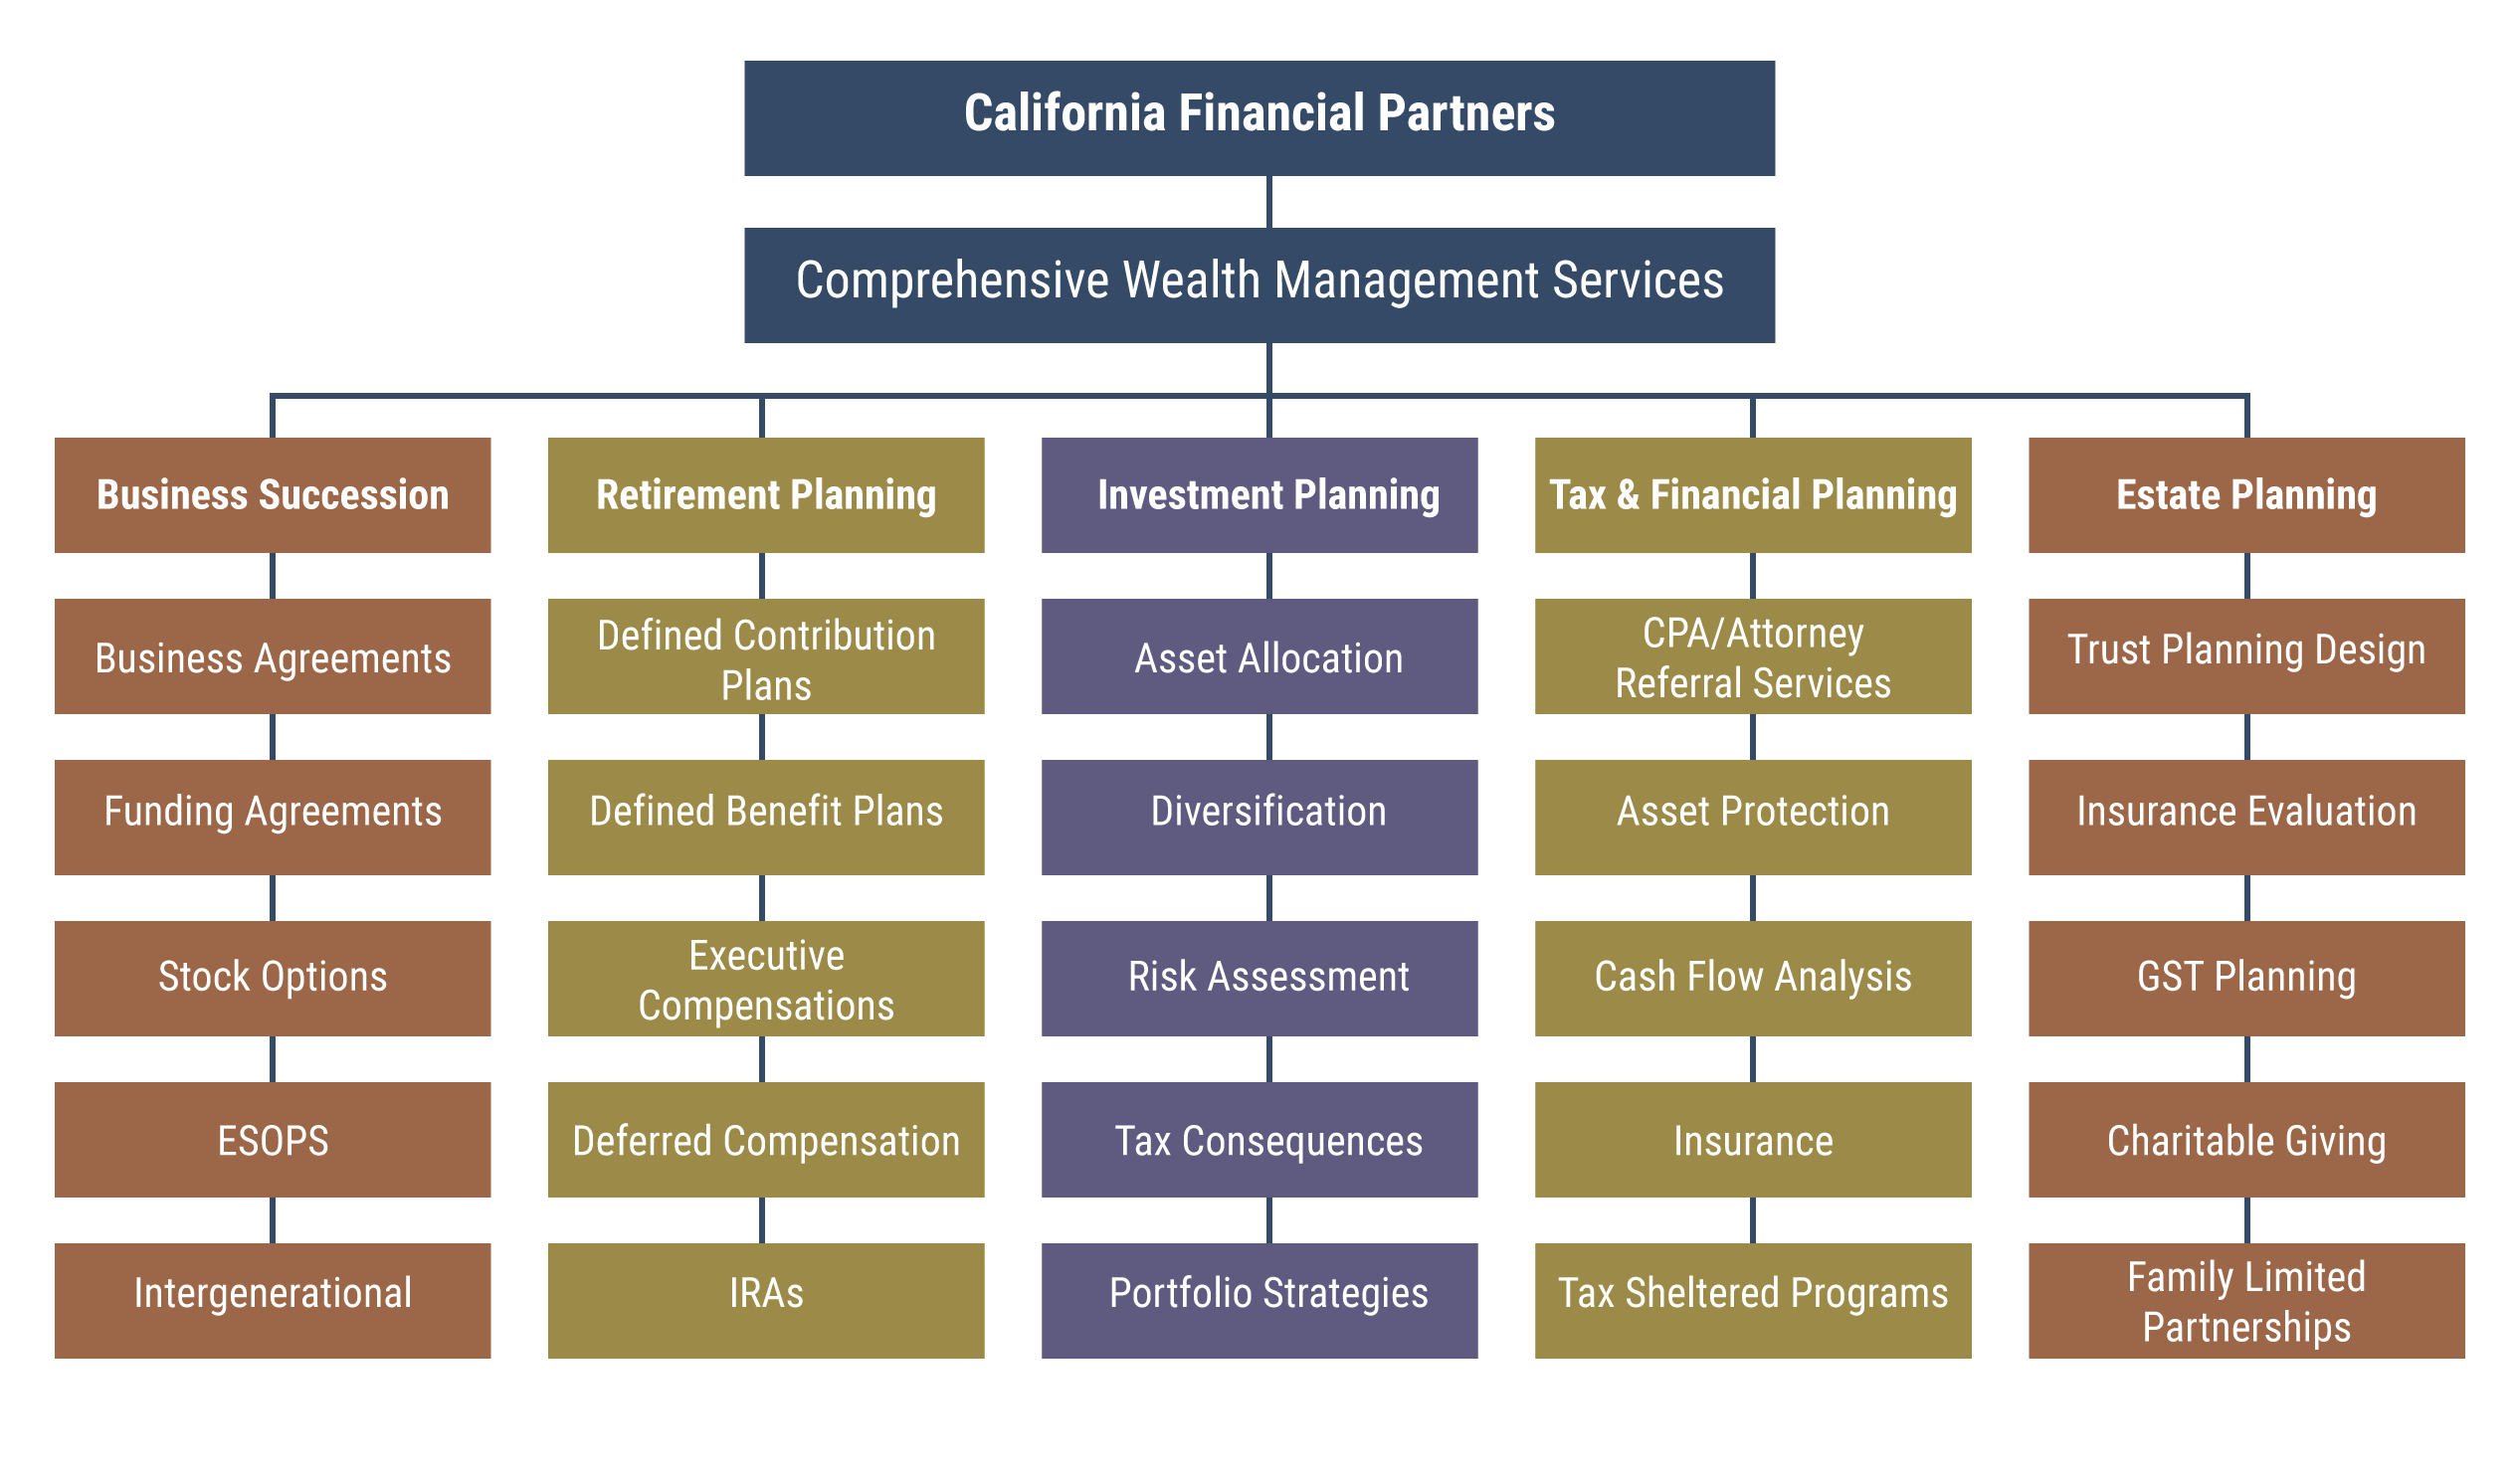 Comprehensive Wealth Management Services